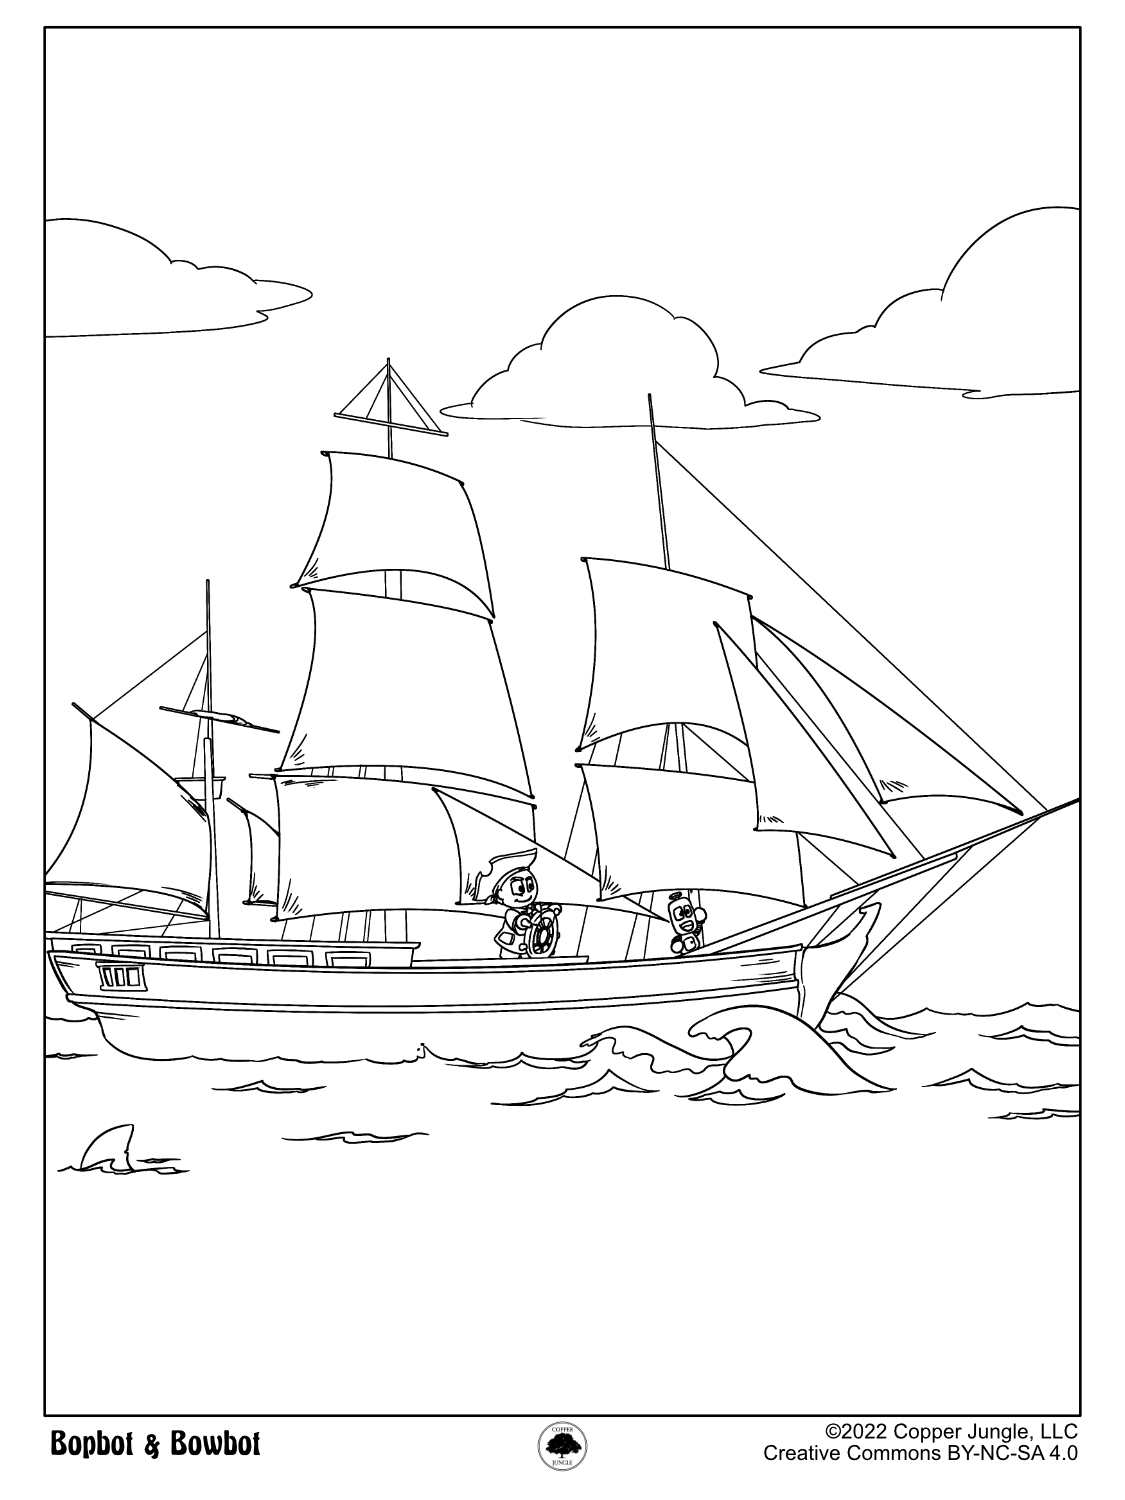 Pirate Ship Coloring Page - Bopbot & Bowbot Treasure Island